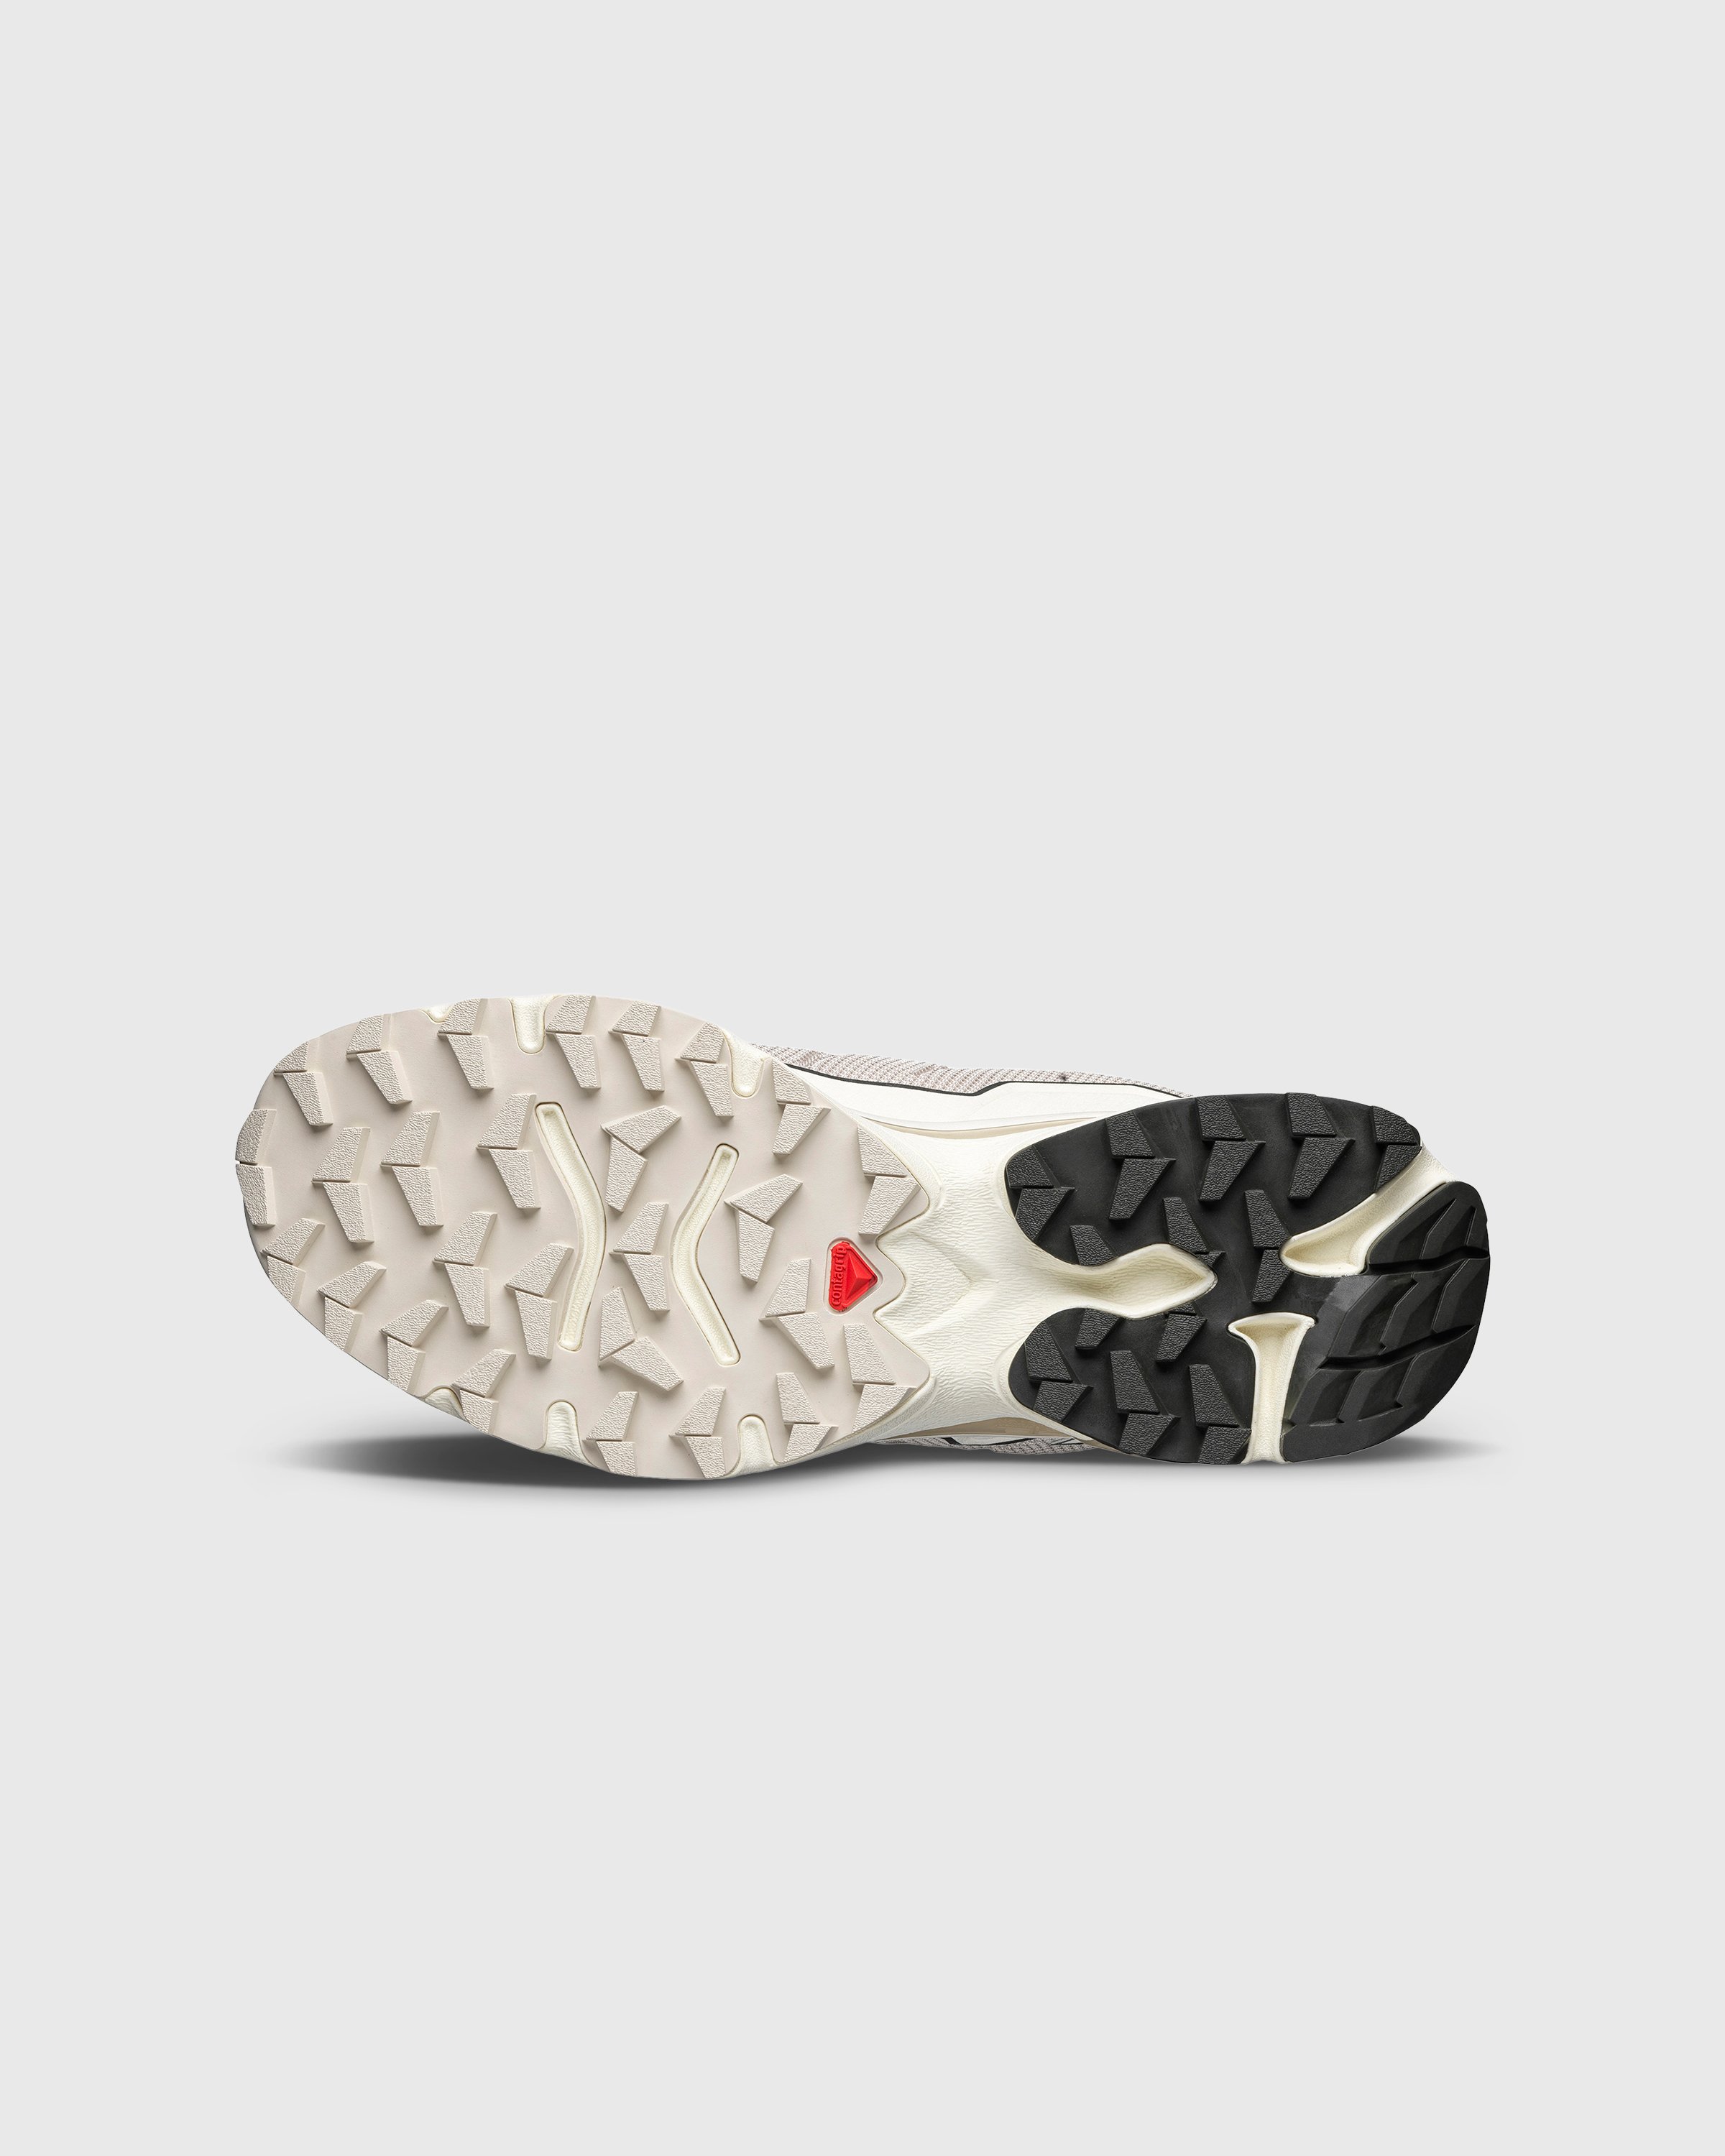 Salomon - XT-Slate Advanced Vanilla/Rainy Day - Footwear - Beige - Image 2